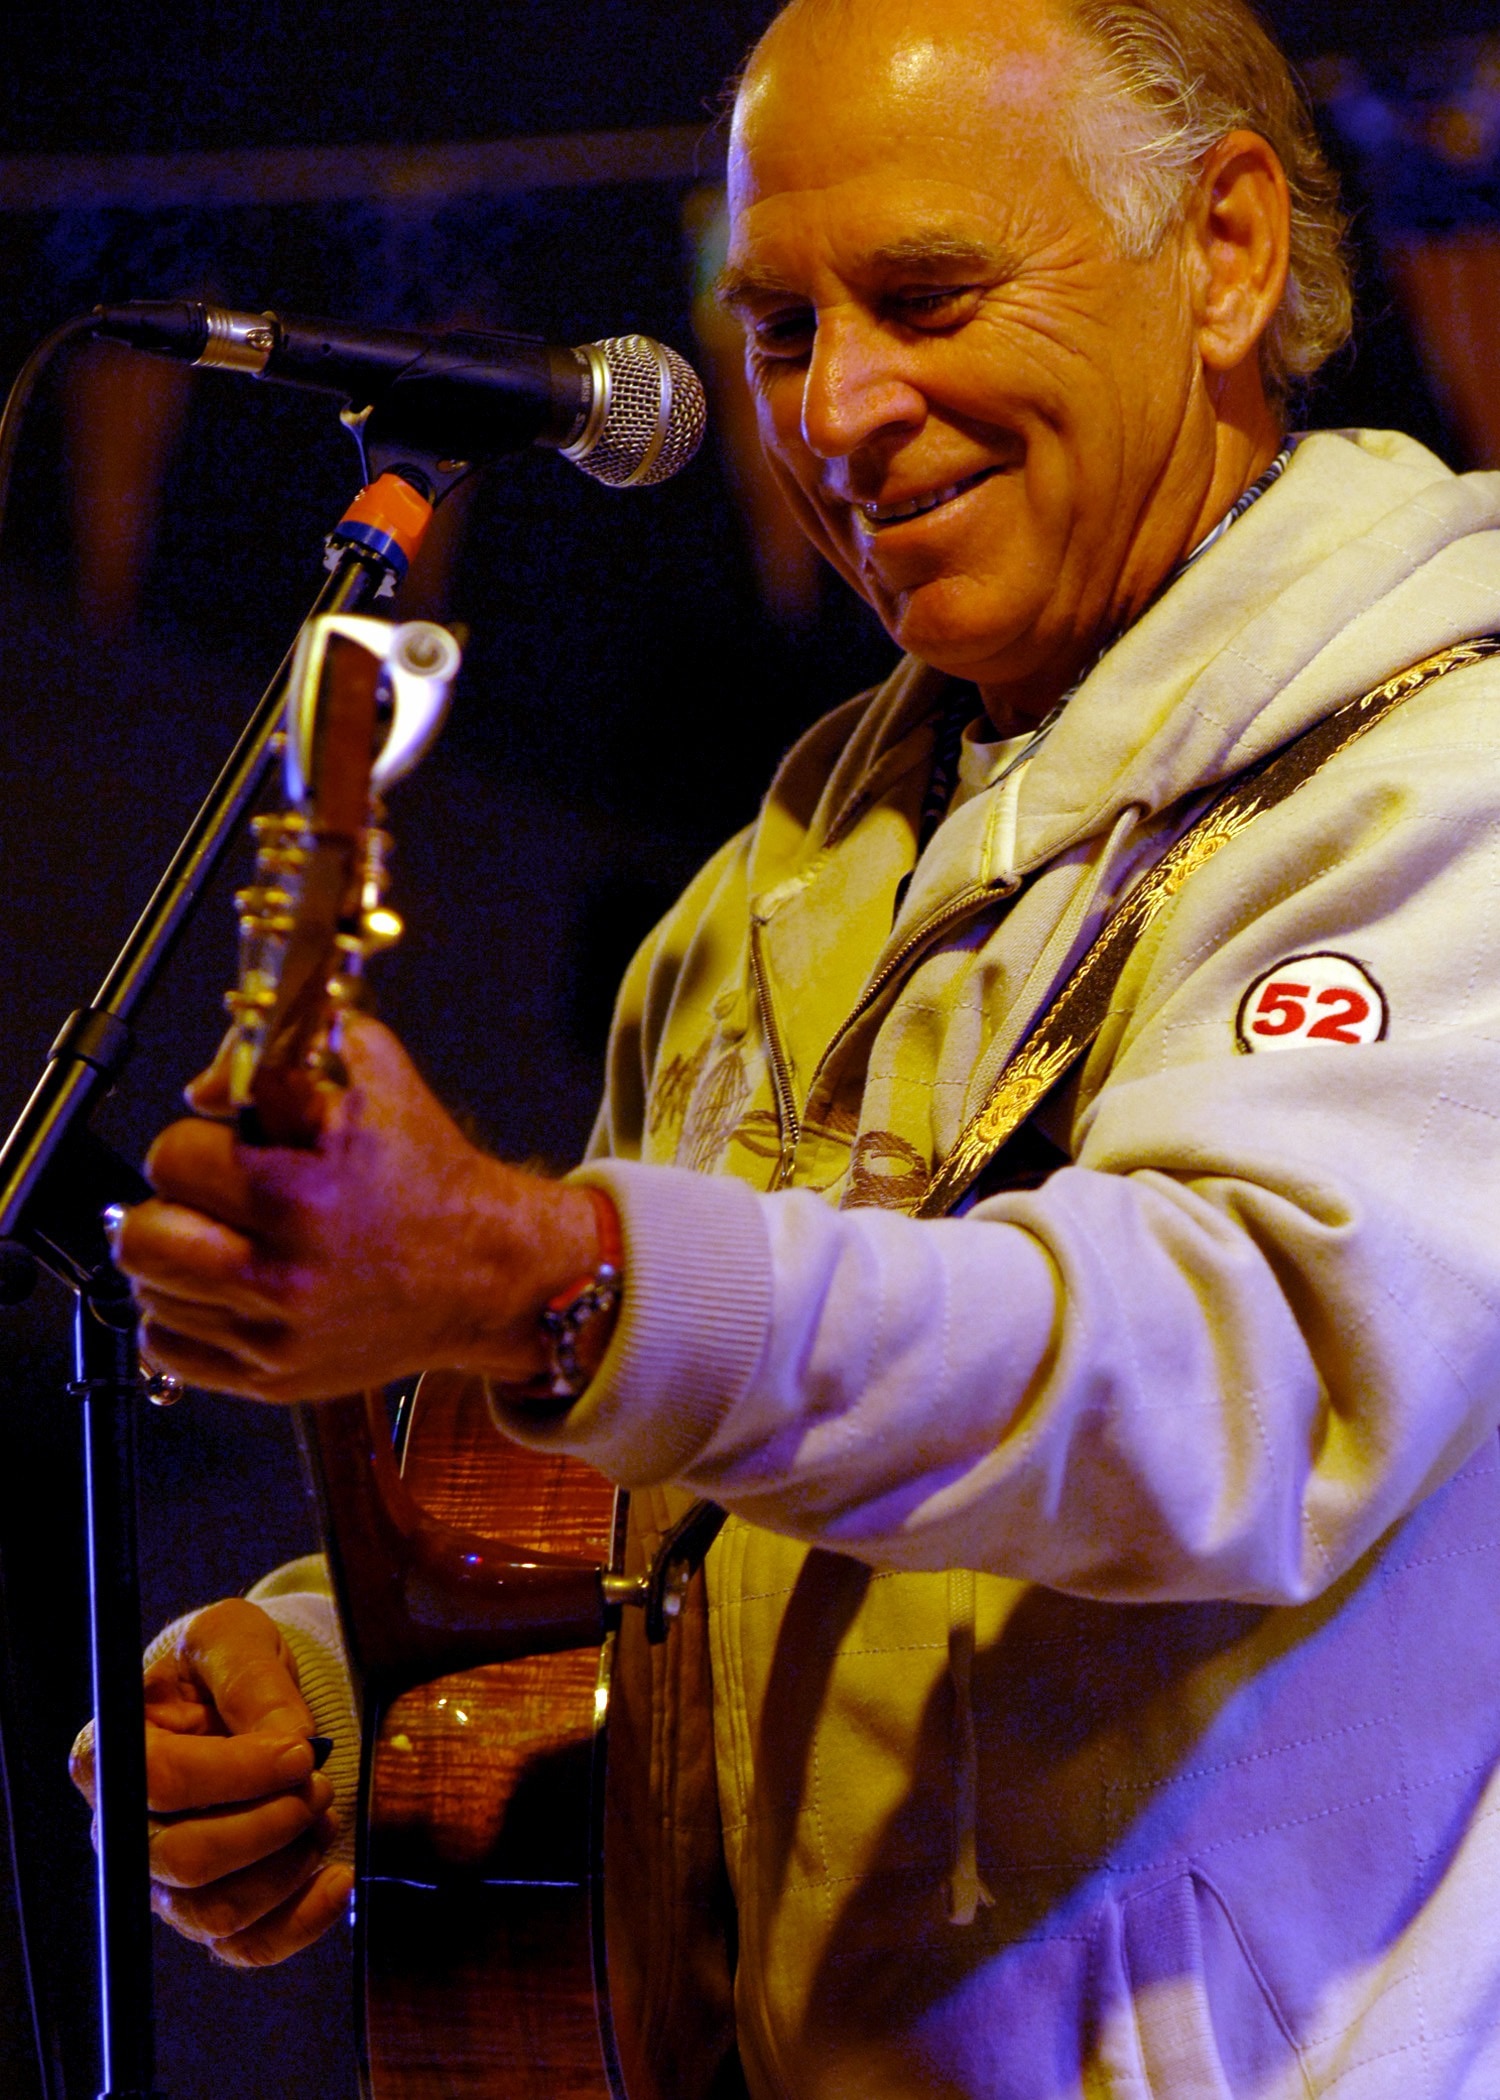 Singer, Jimmy Buffet, Guitarist, music, one person